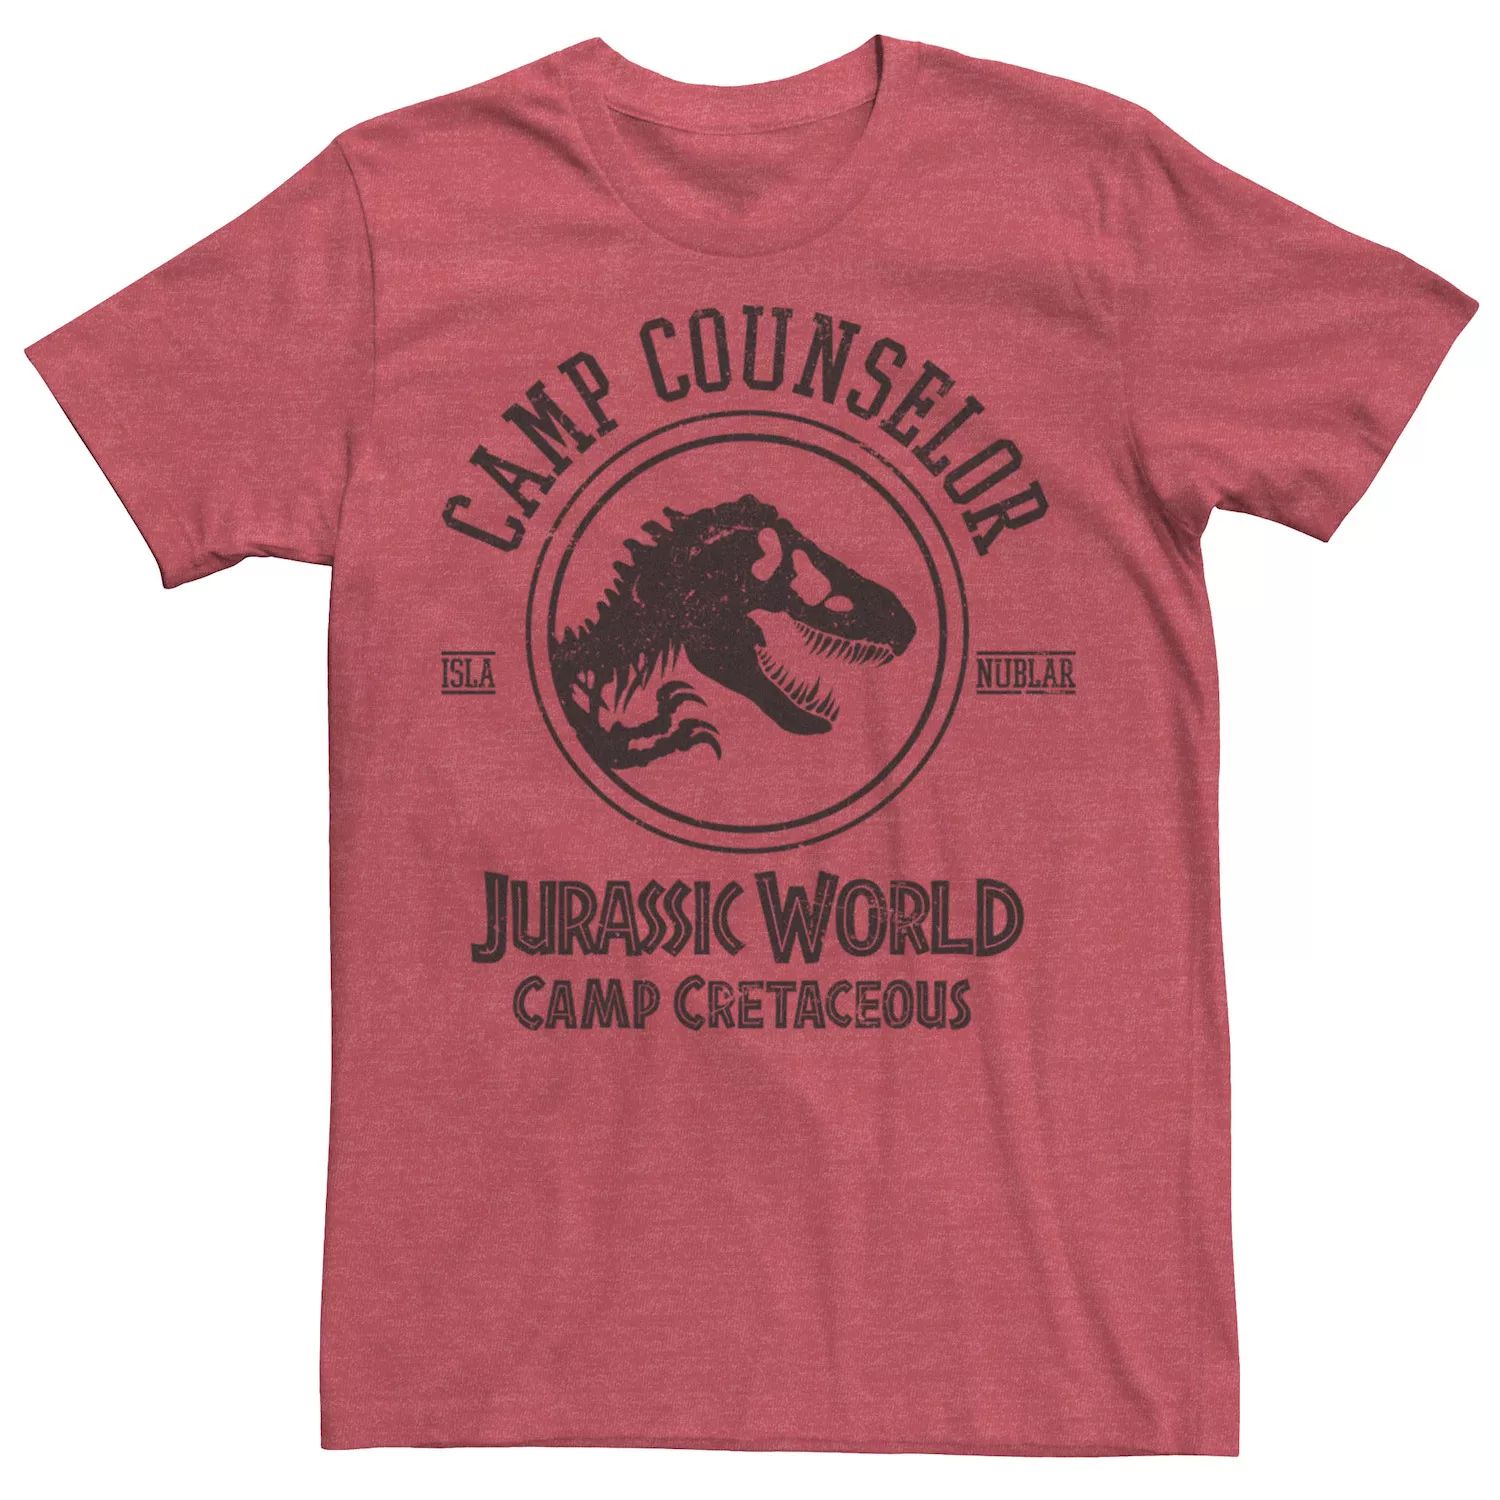 Мужская футболка Jurassic World: Camp Melaceous Camp Counselor Tee Licensed Character